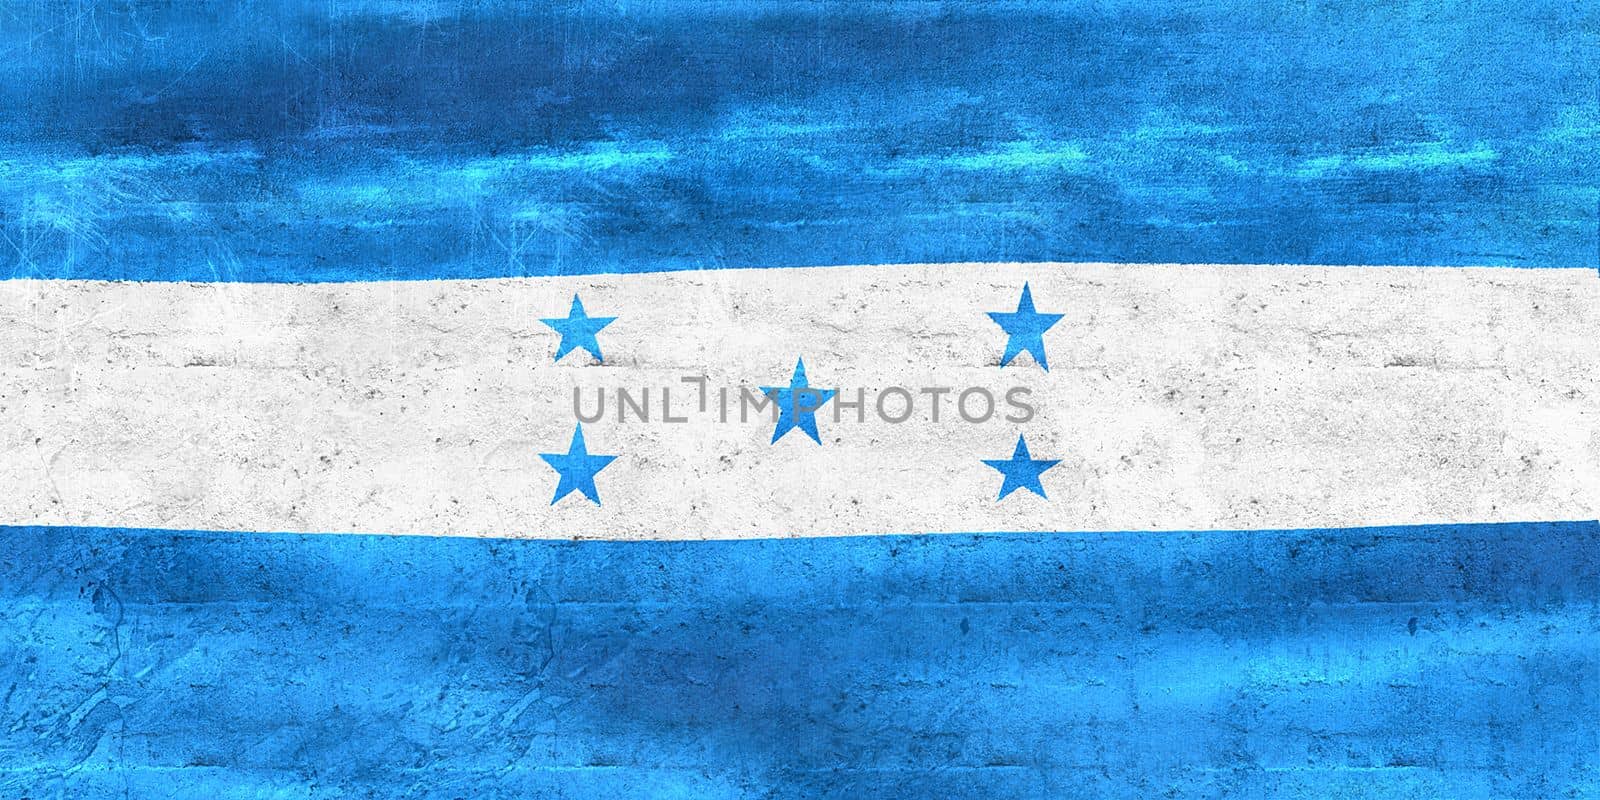 3D-Illustration of a Honduras flag - realistic waving fabric flag by MP_foto71